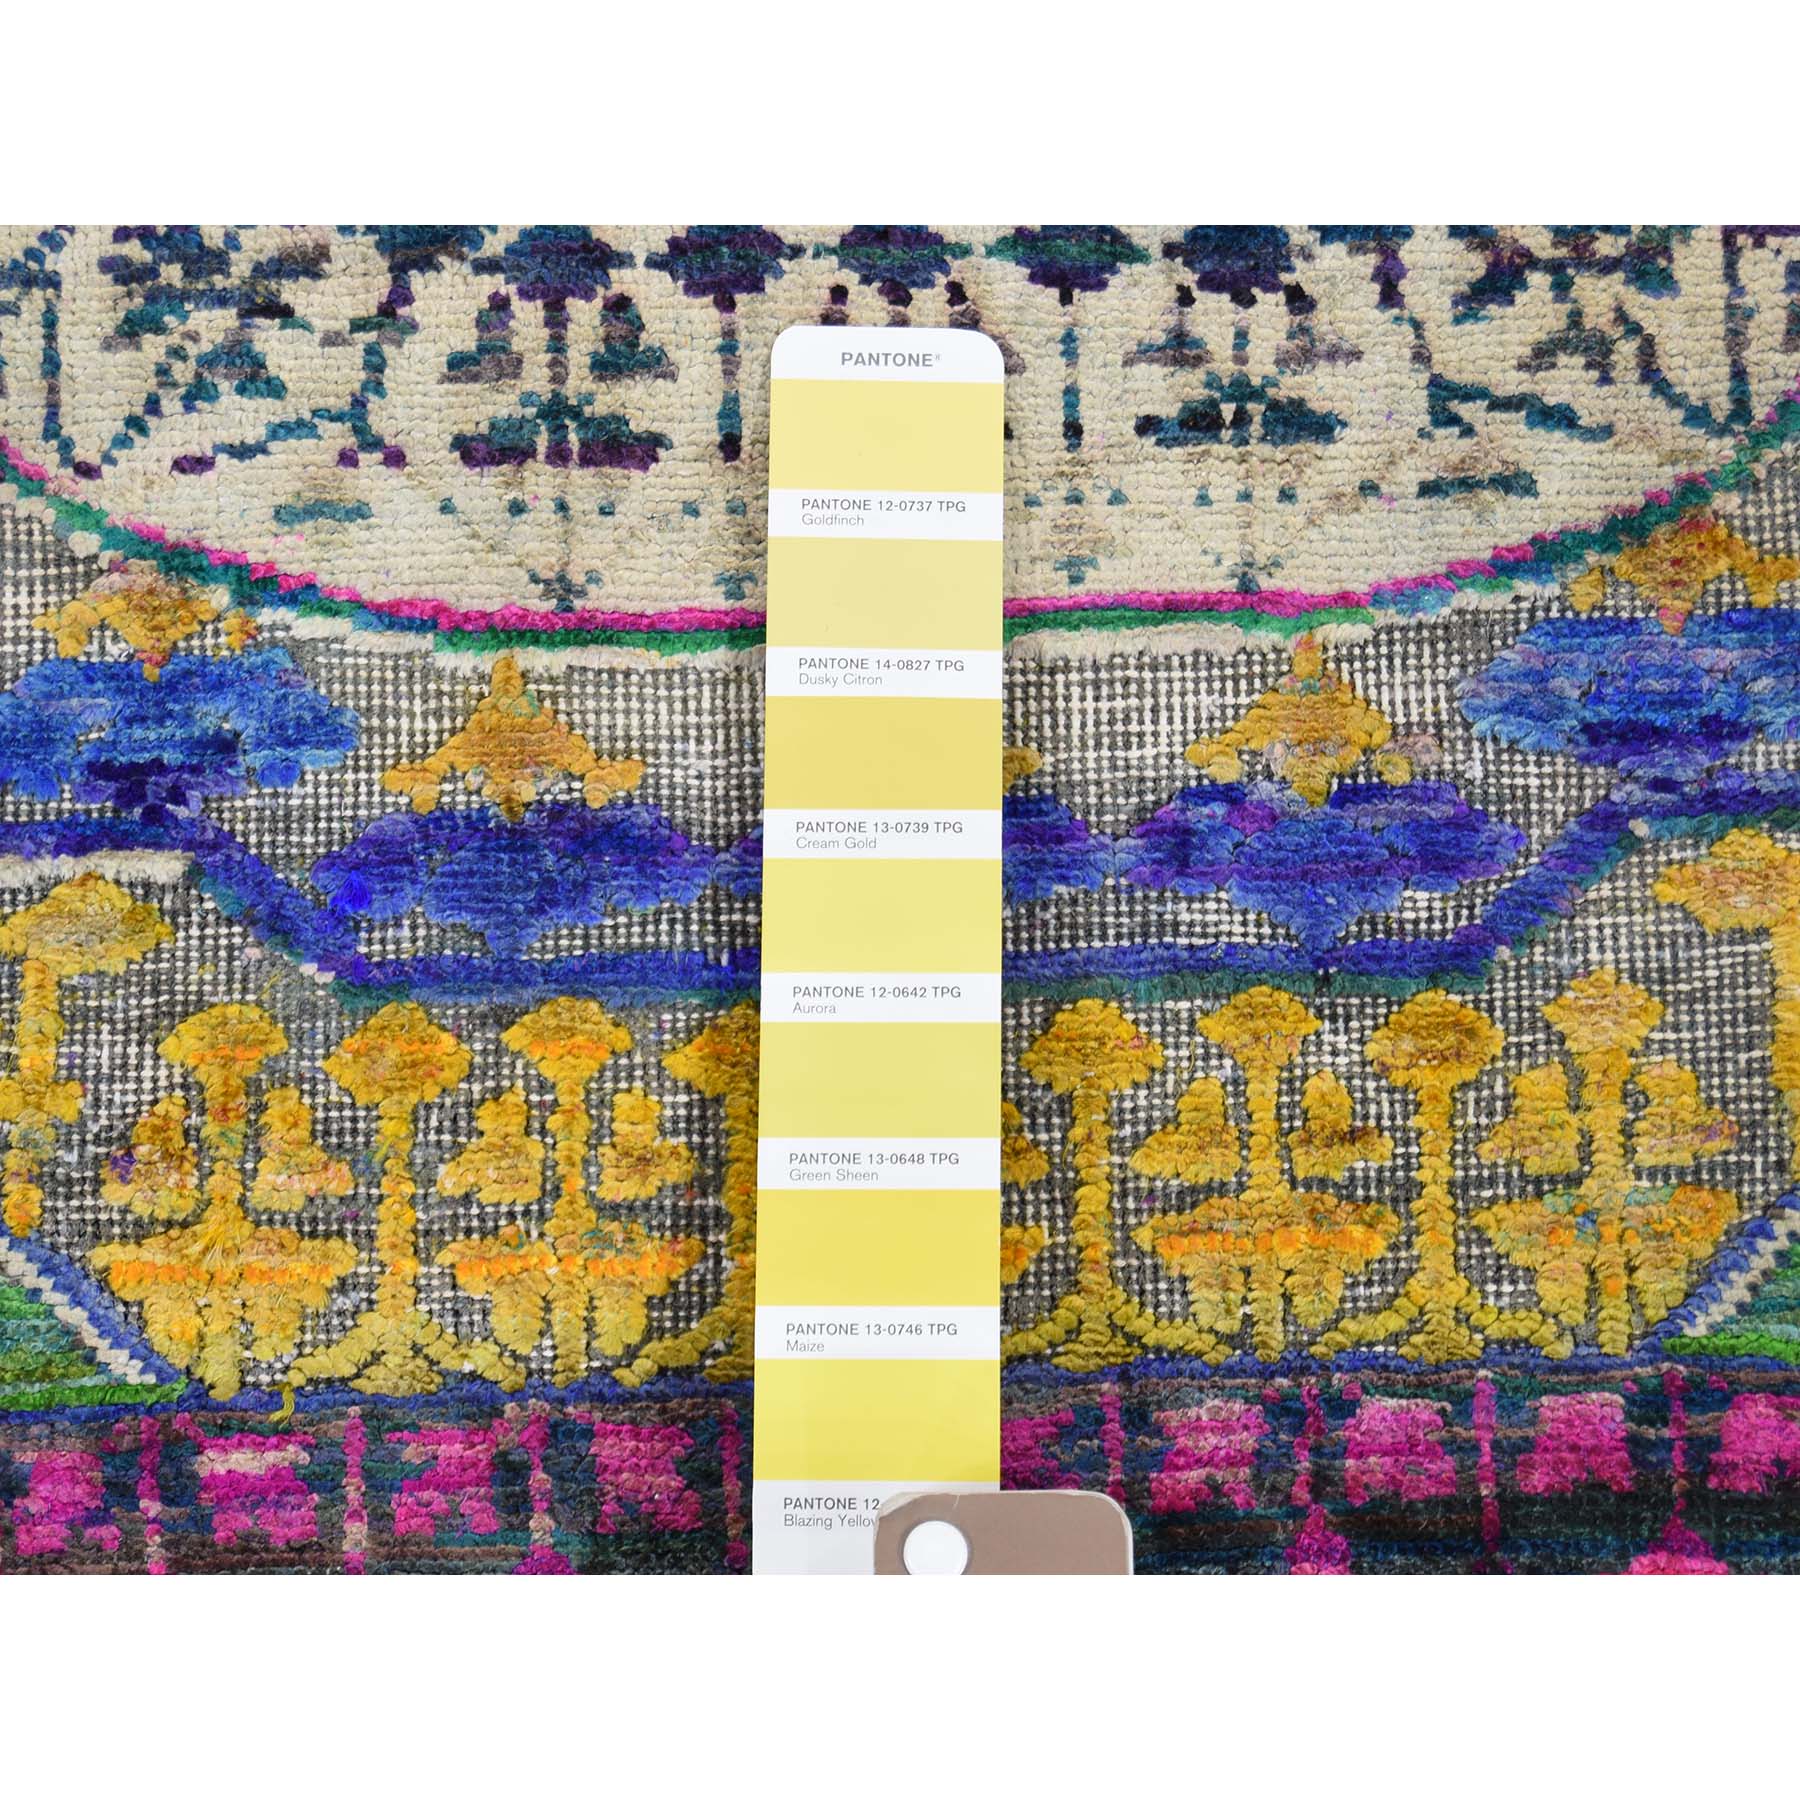 3-2 x17-4  Sari Silk with Textured Wool Mamluk Design XL Runner Oriental Rug 